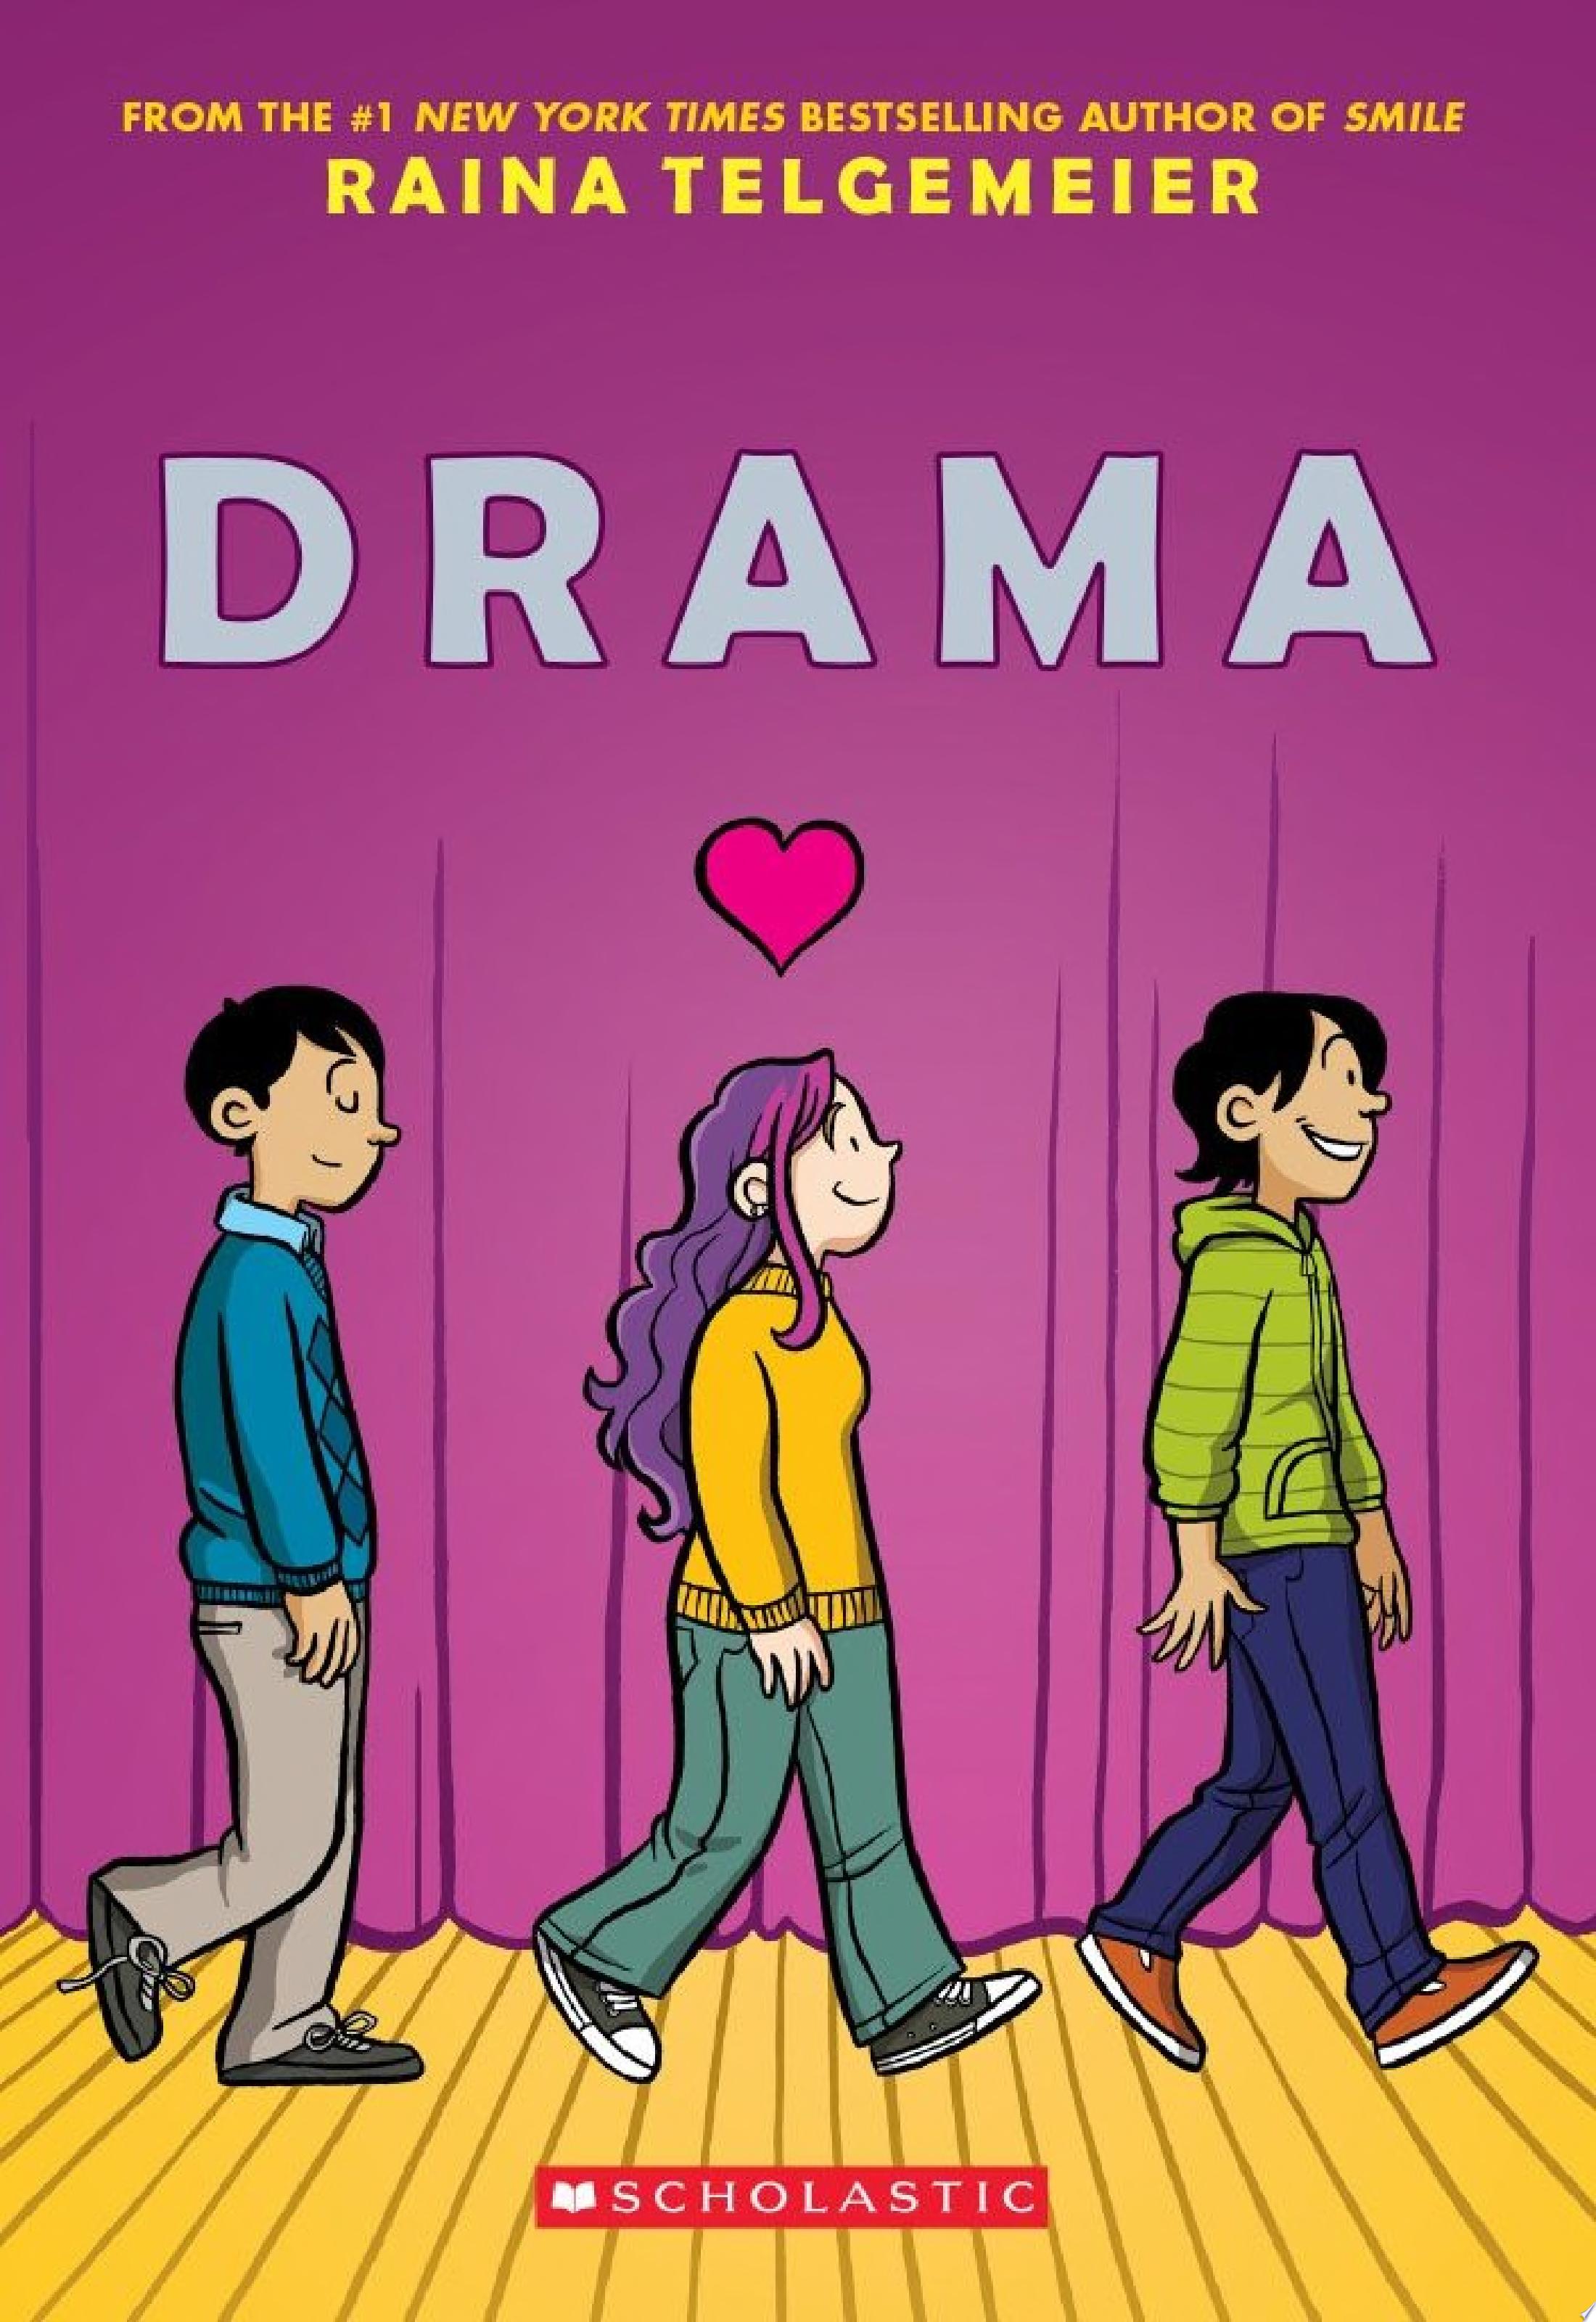 Image for "Drama"